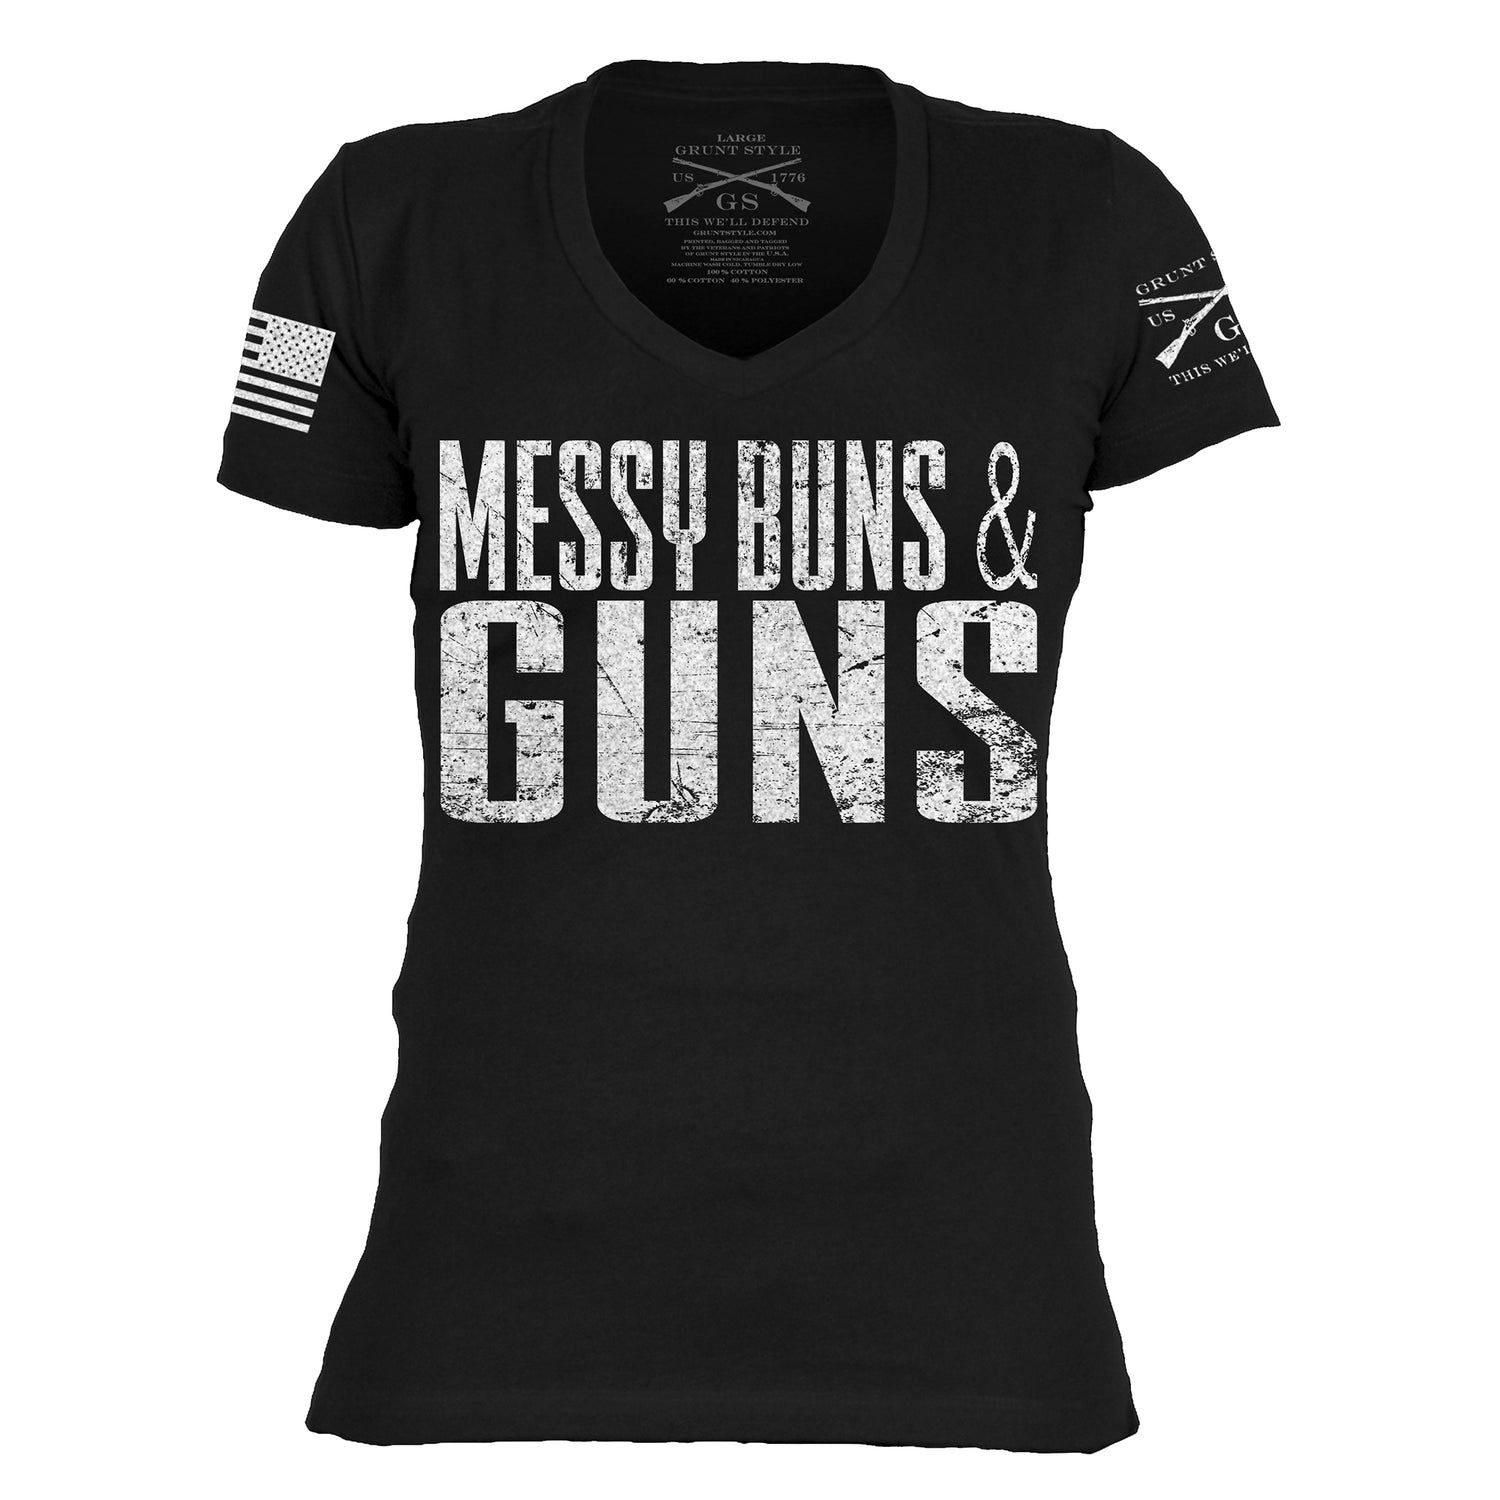  gun shirt bundle - women's v neck t shirts